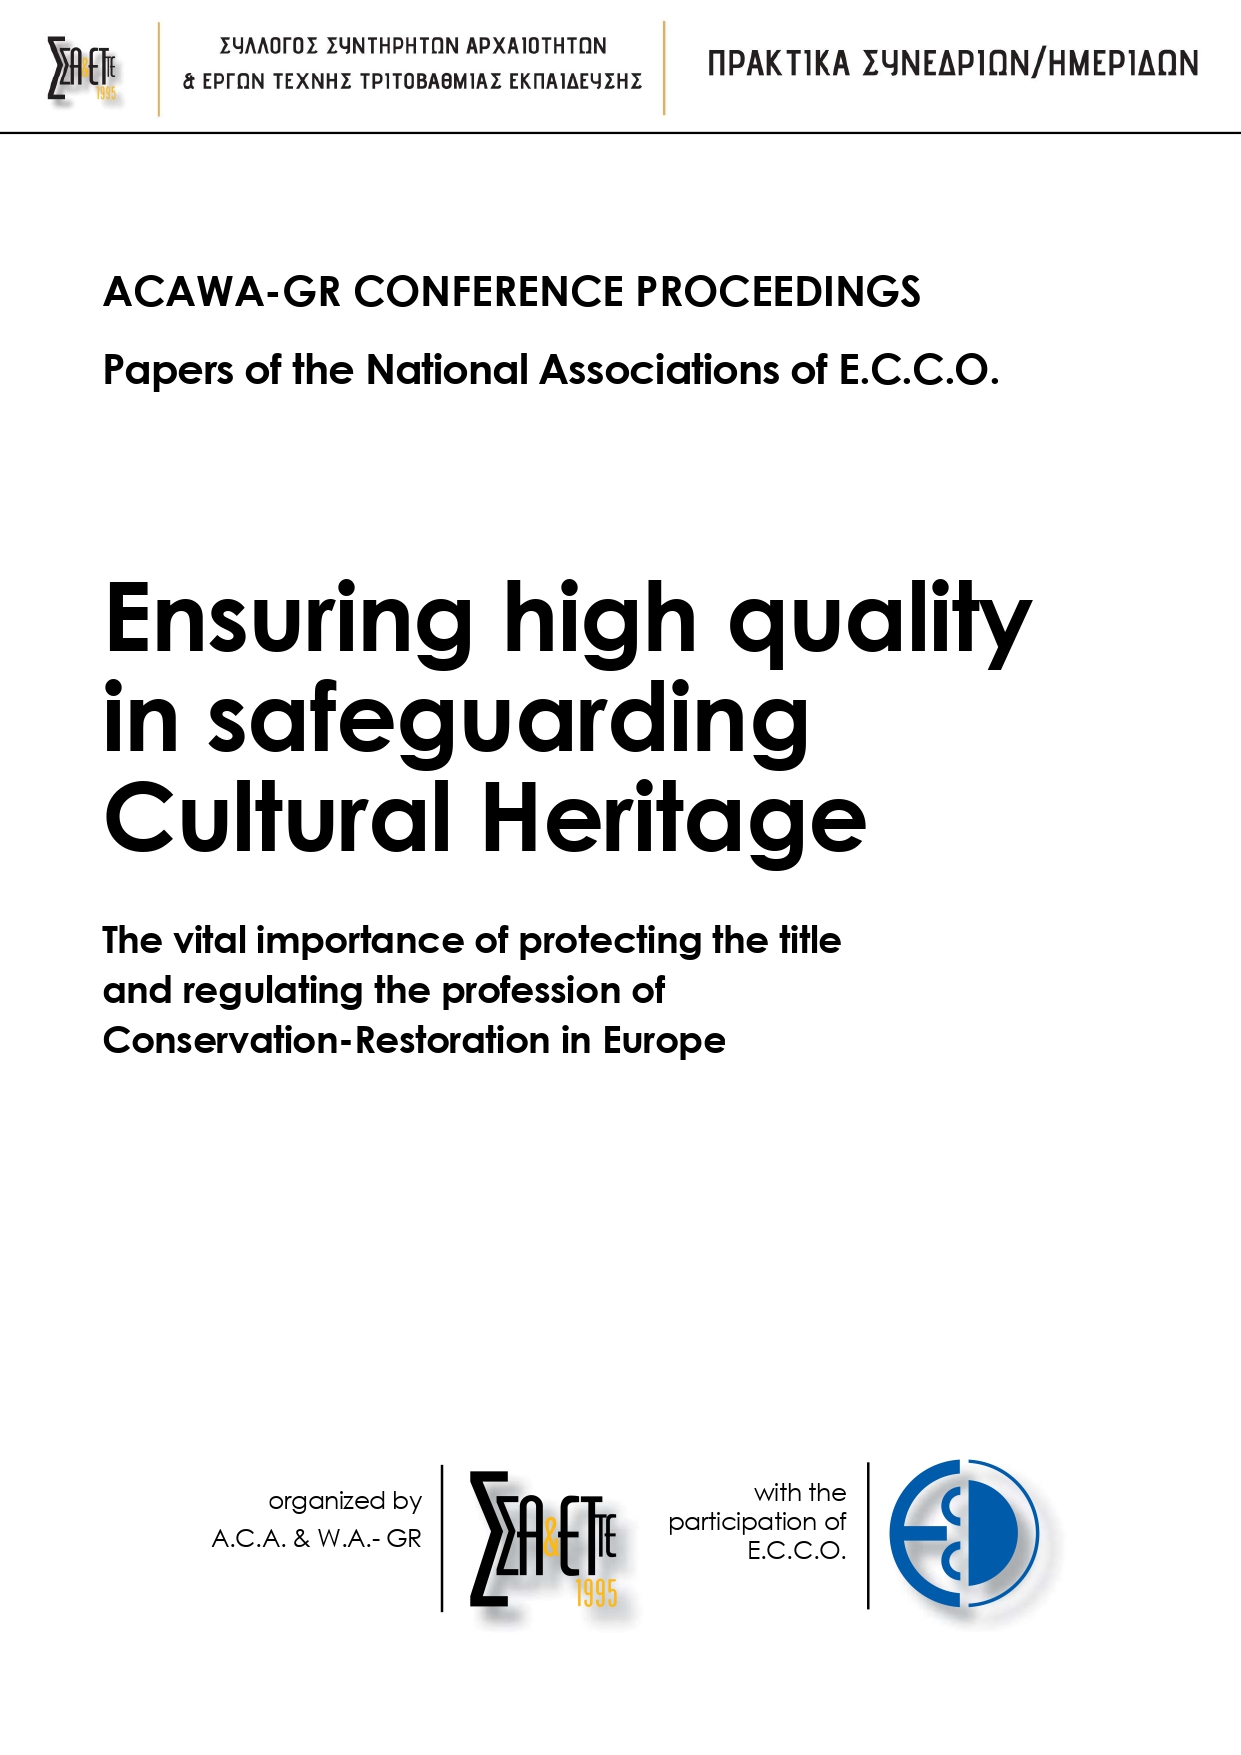 Cover page: “Ensuring high quality in safeguarding Cultural Heritage - The vital importance of protecting the title and regulating the profession of Conservation-Restoration in Europe” | Εικόνα εξωφύλλου: «Διασφάλιση υψηλής ποιότητας για τη διατήρηση της Πολιτιστικής Κληρονομιάς – Η ζωτική σημασία της προστασίας του τίτλου και της κατοχύρωσης του επαγγέλματος της Συντήρησης στην Ευρώπη»